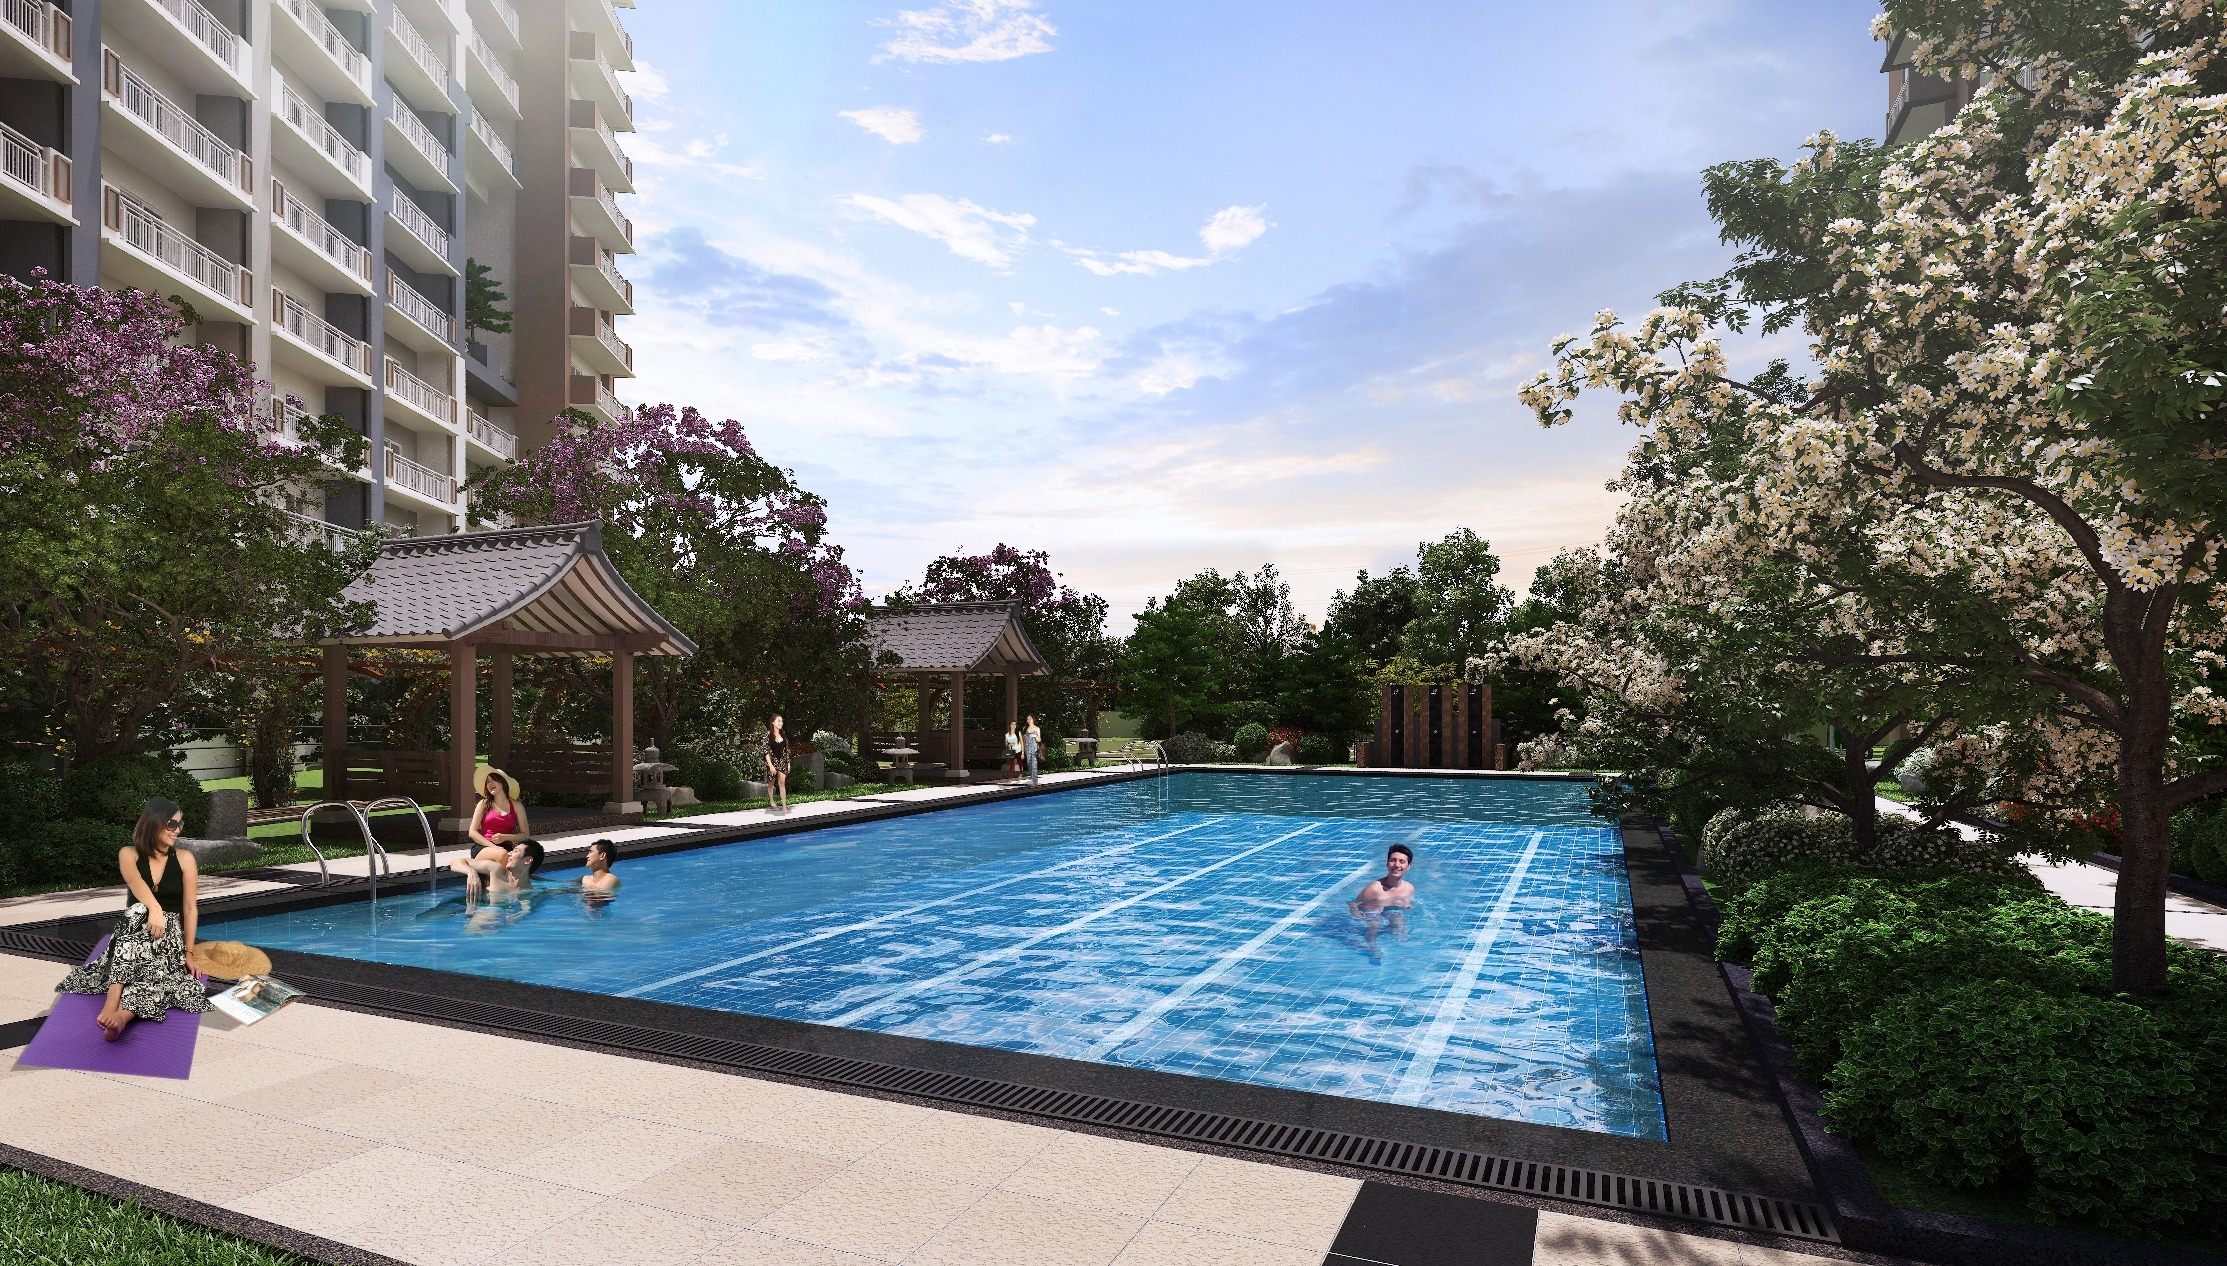 Digital render of a swimming pool area